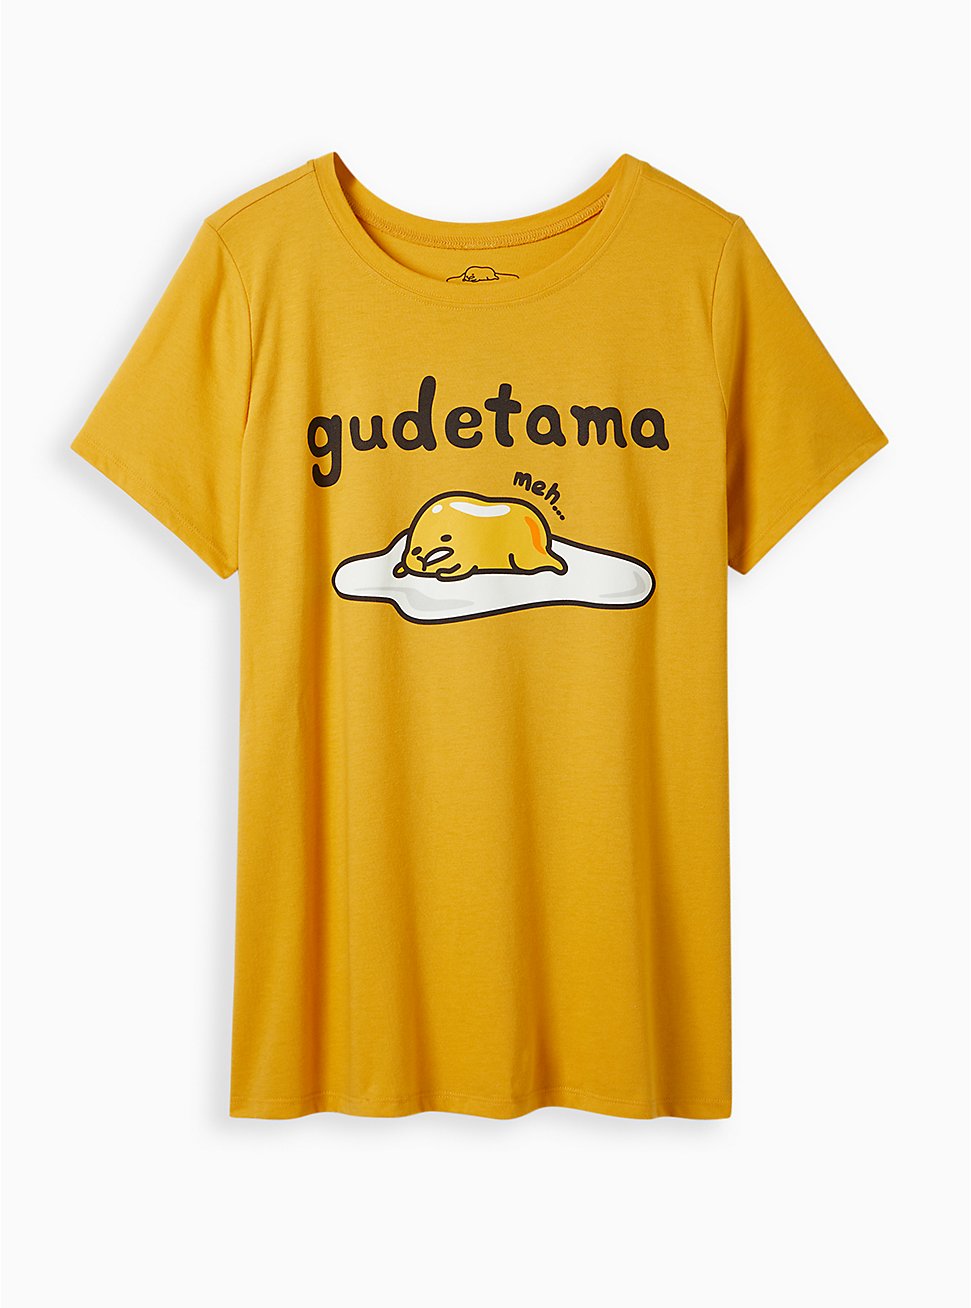 Plus Size Gudetama Classic Fit Crew Tee - Cotton Yellow, GOLDEN YELLOW, hi-res